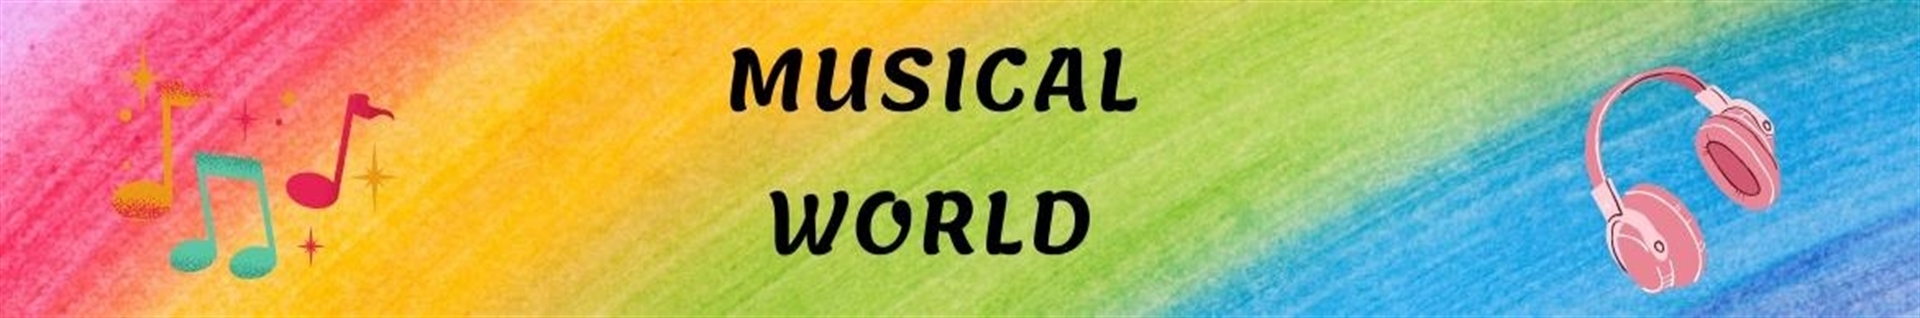 Musical World